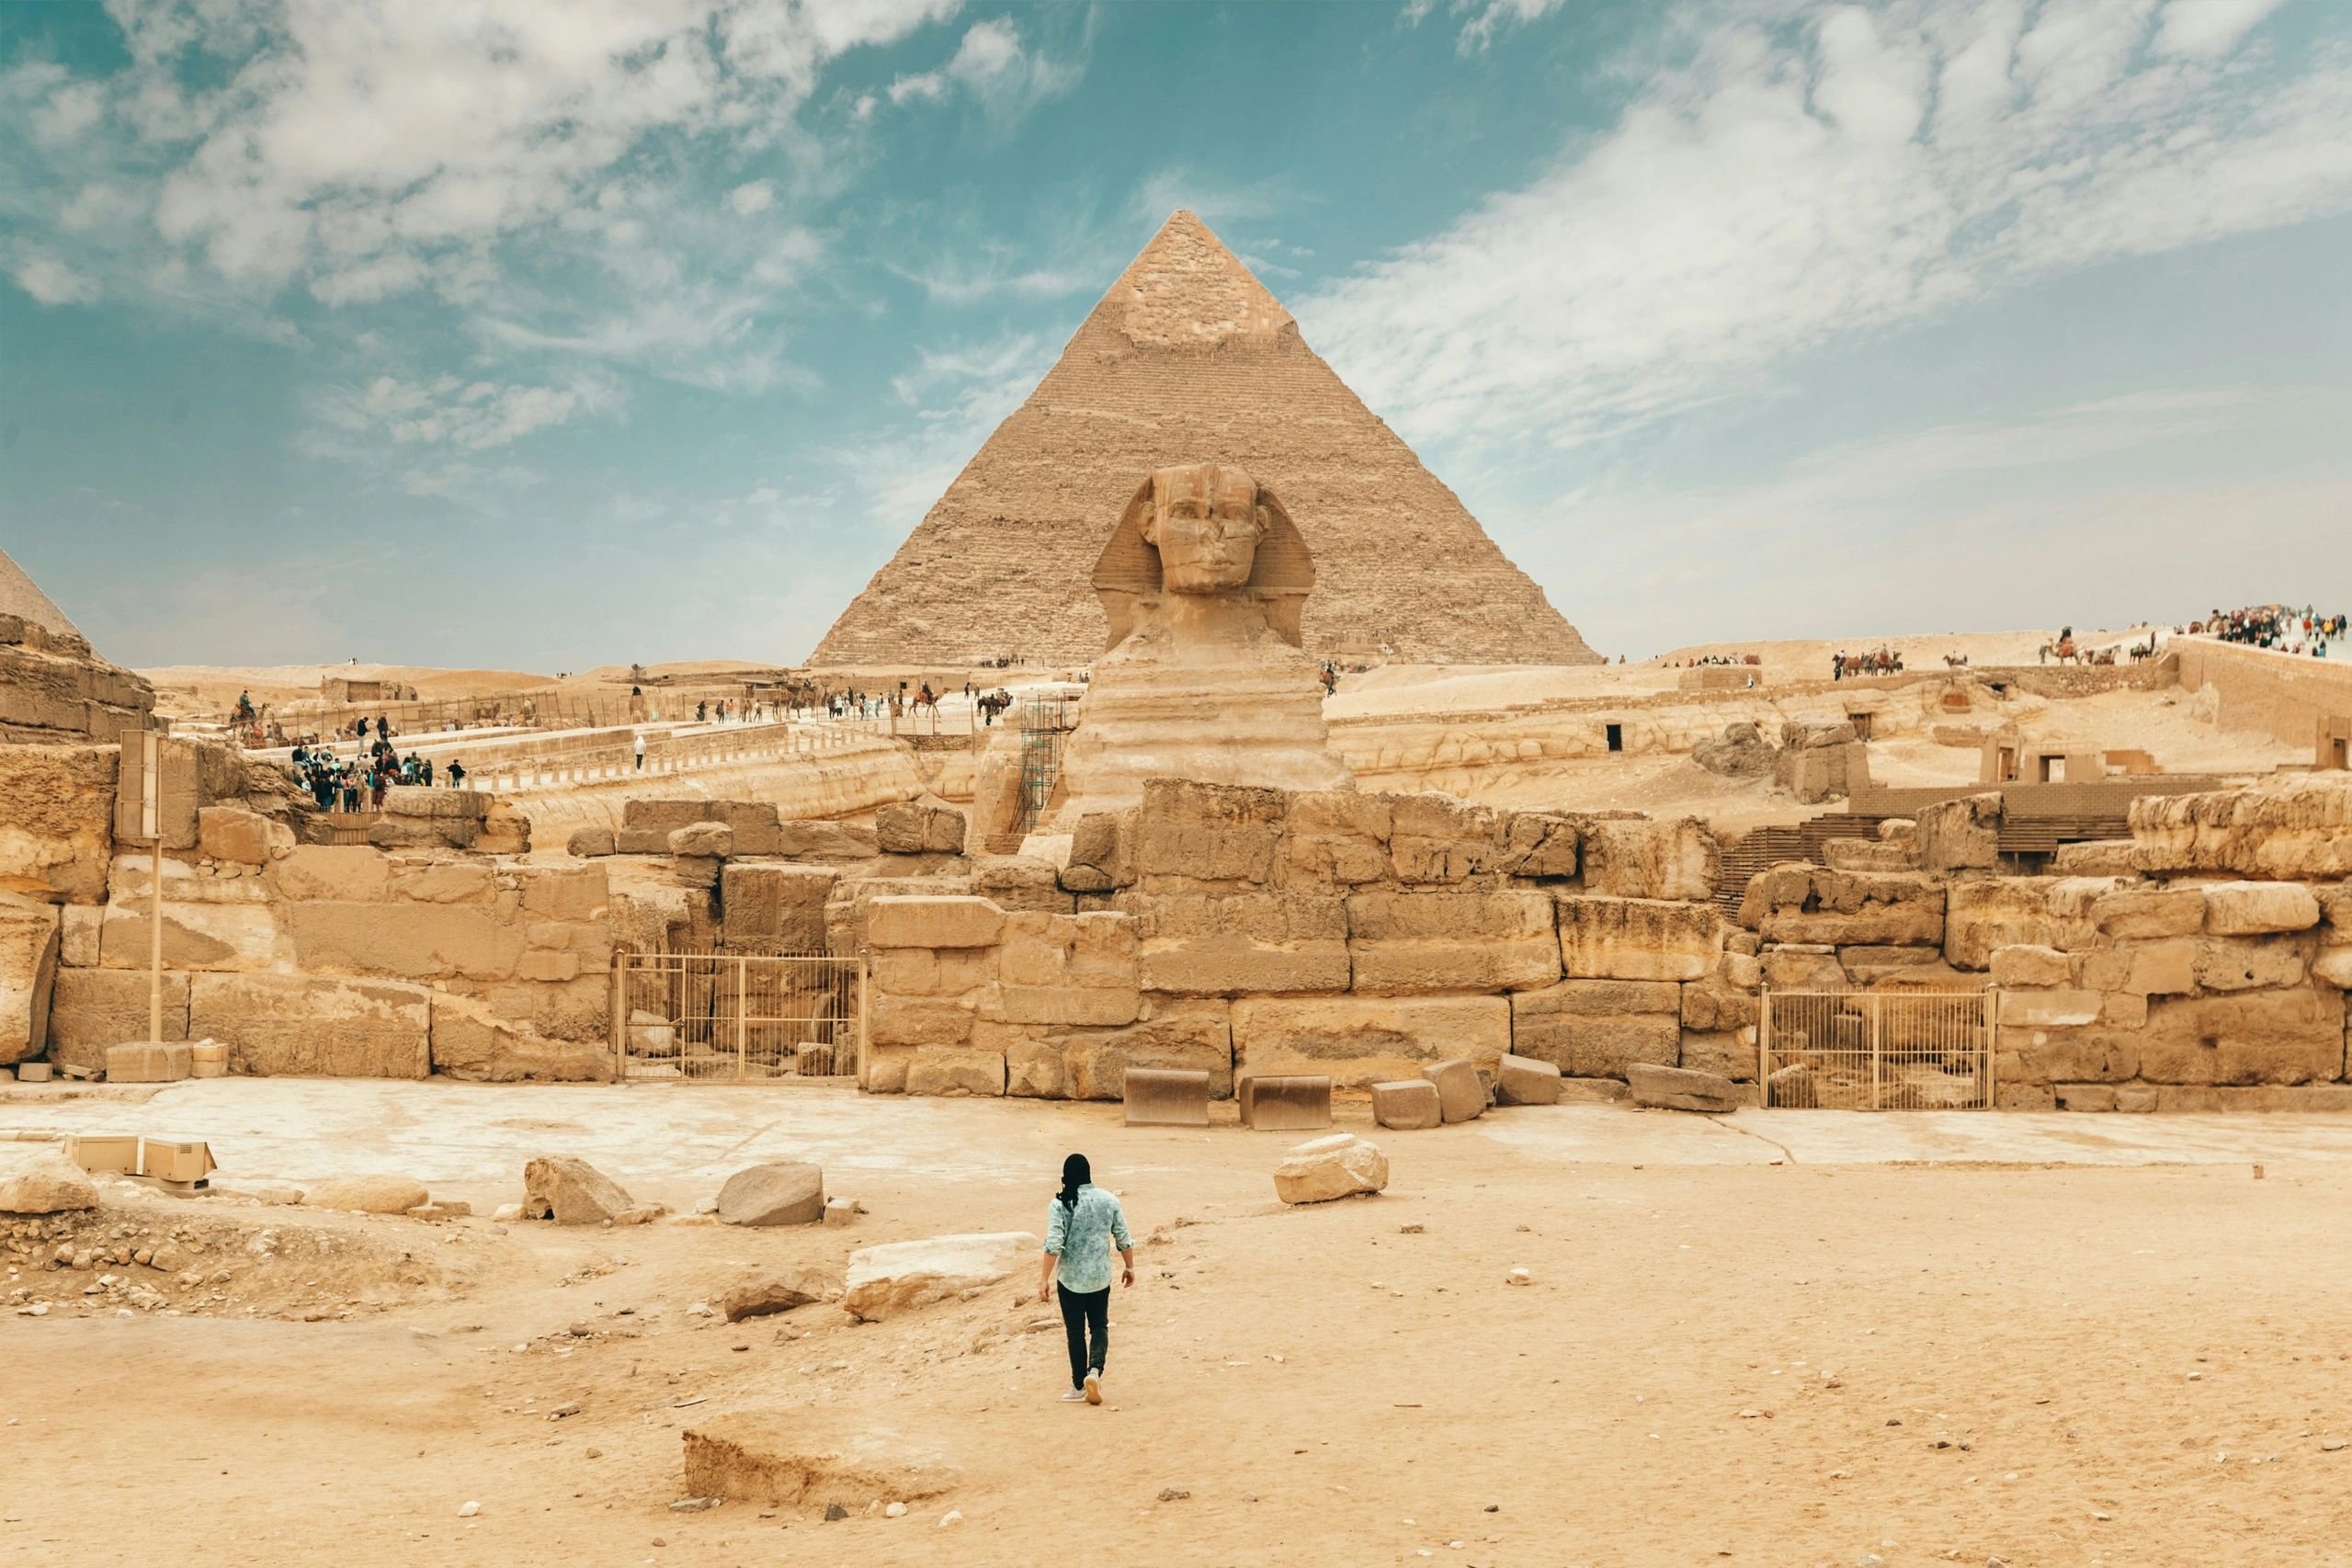 Egypt ancient pyramids tutenkahmun